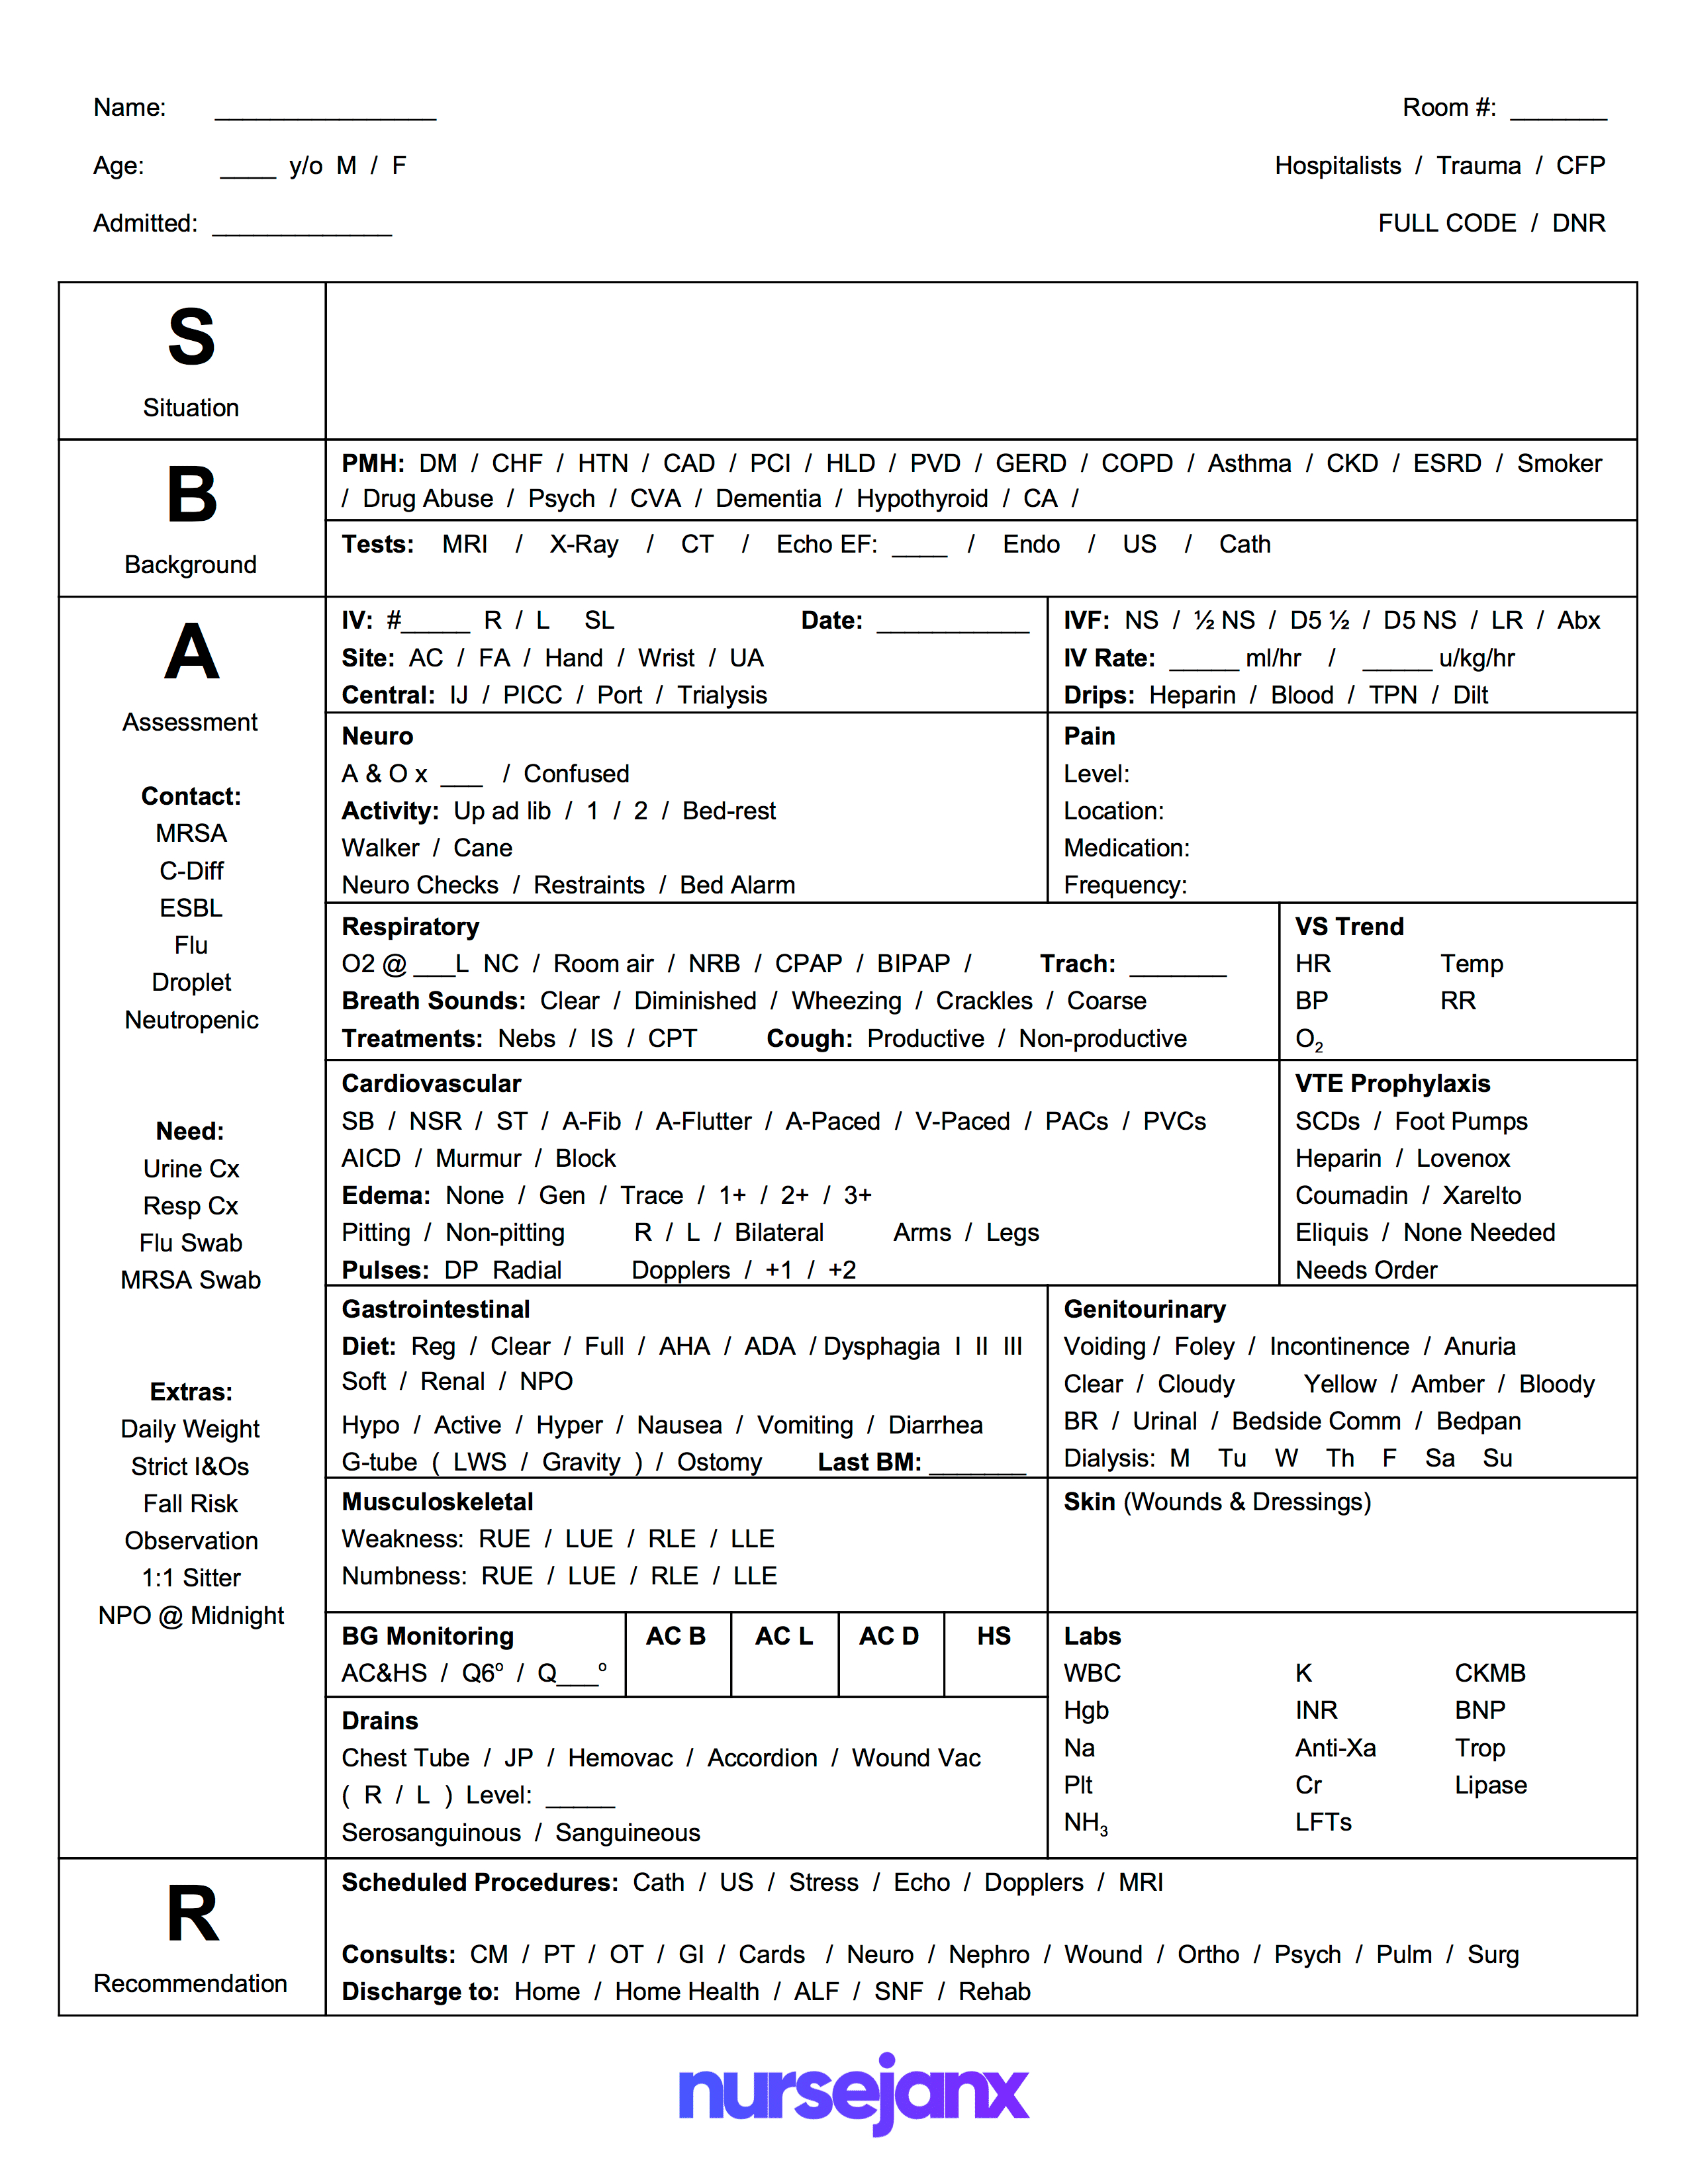 Free Download This Is A Fullsize Sbar Nursing Brain Report Sheet in Sbar Template Word